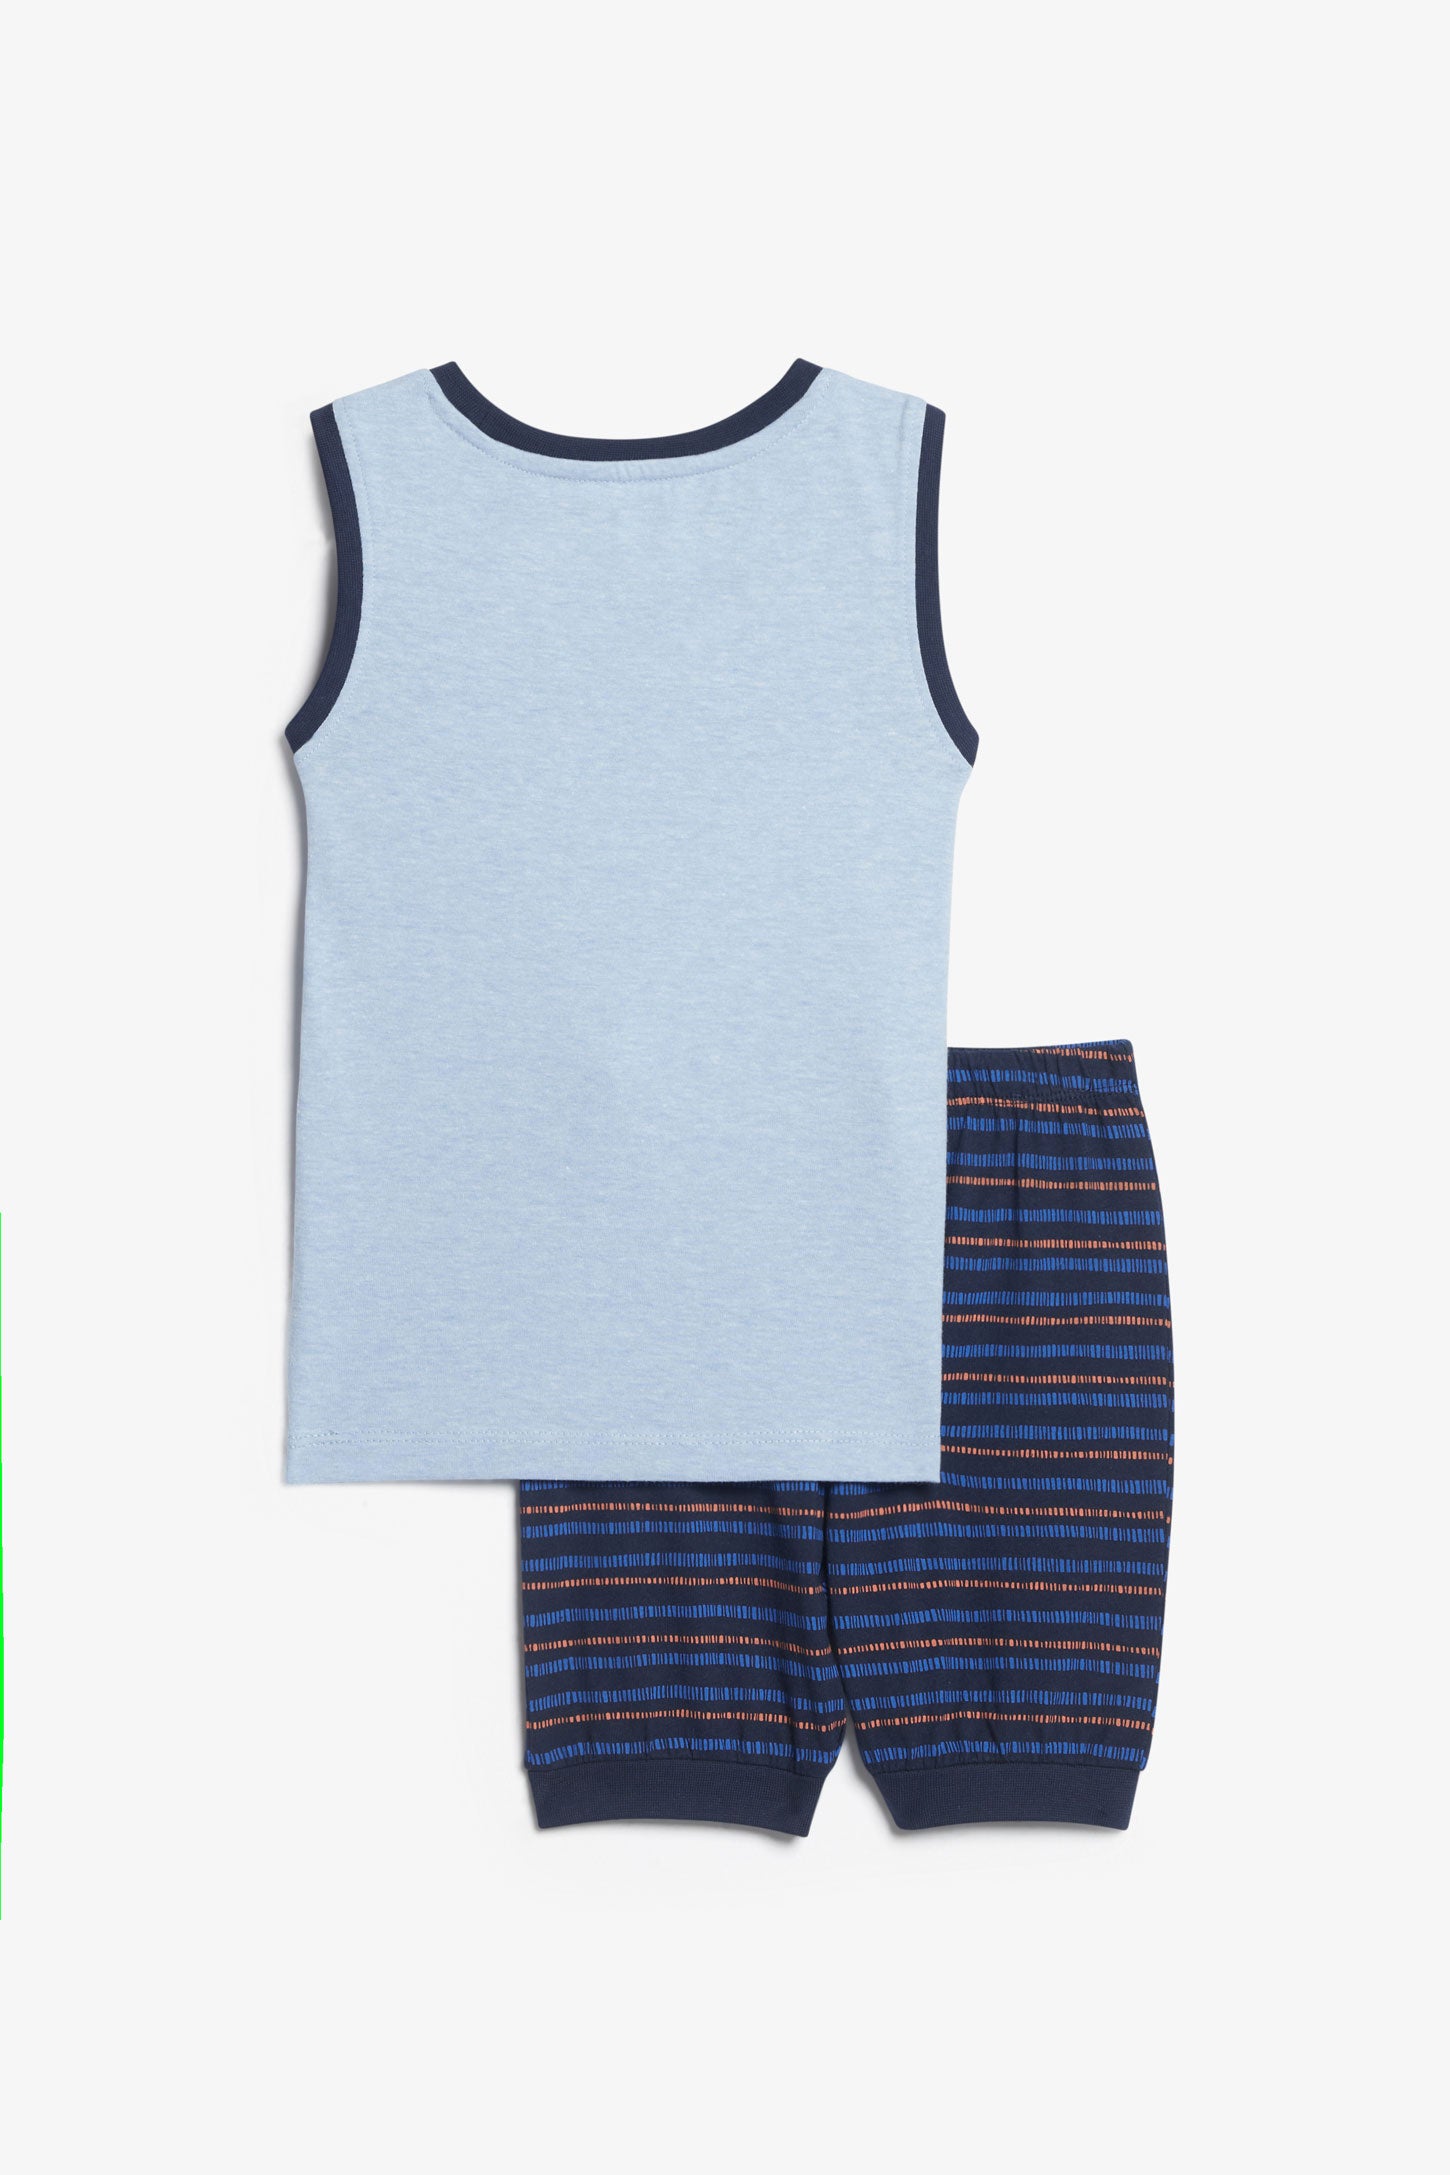 Pyjama 2-pièces en coton, 2/35$ - Enfant garçon && BLEU MIXTE